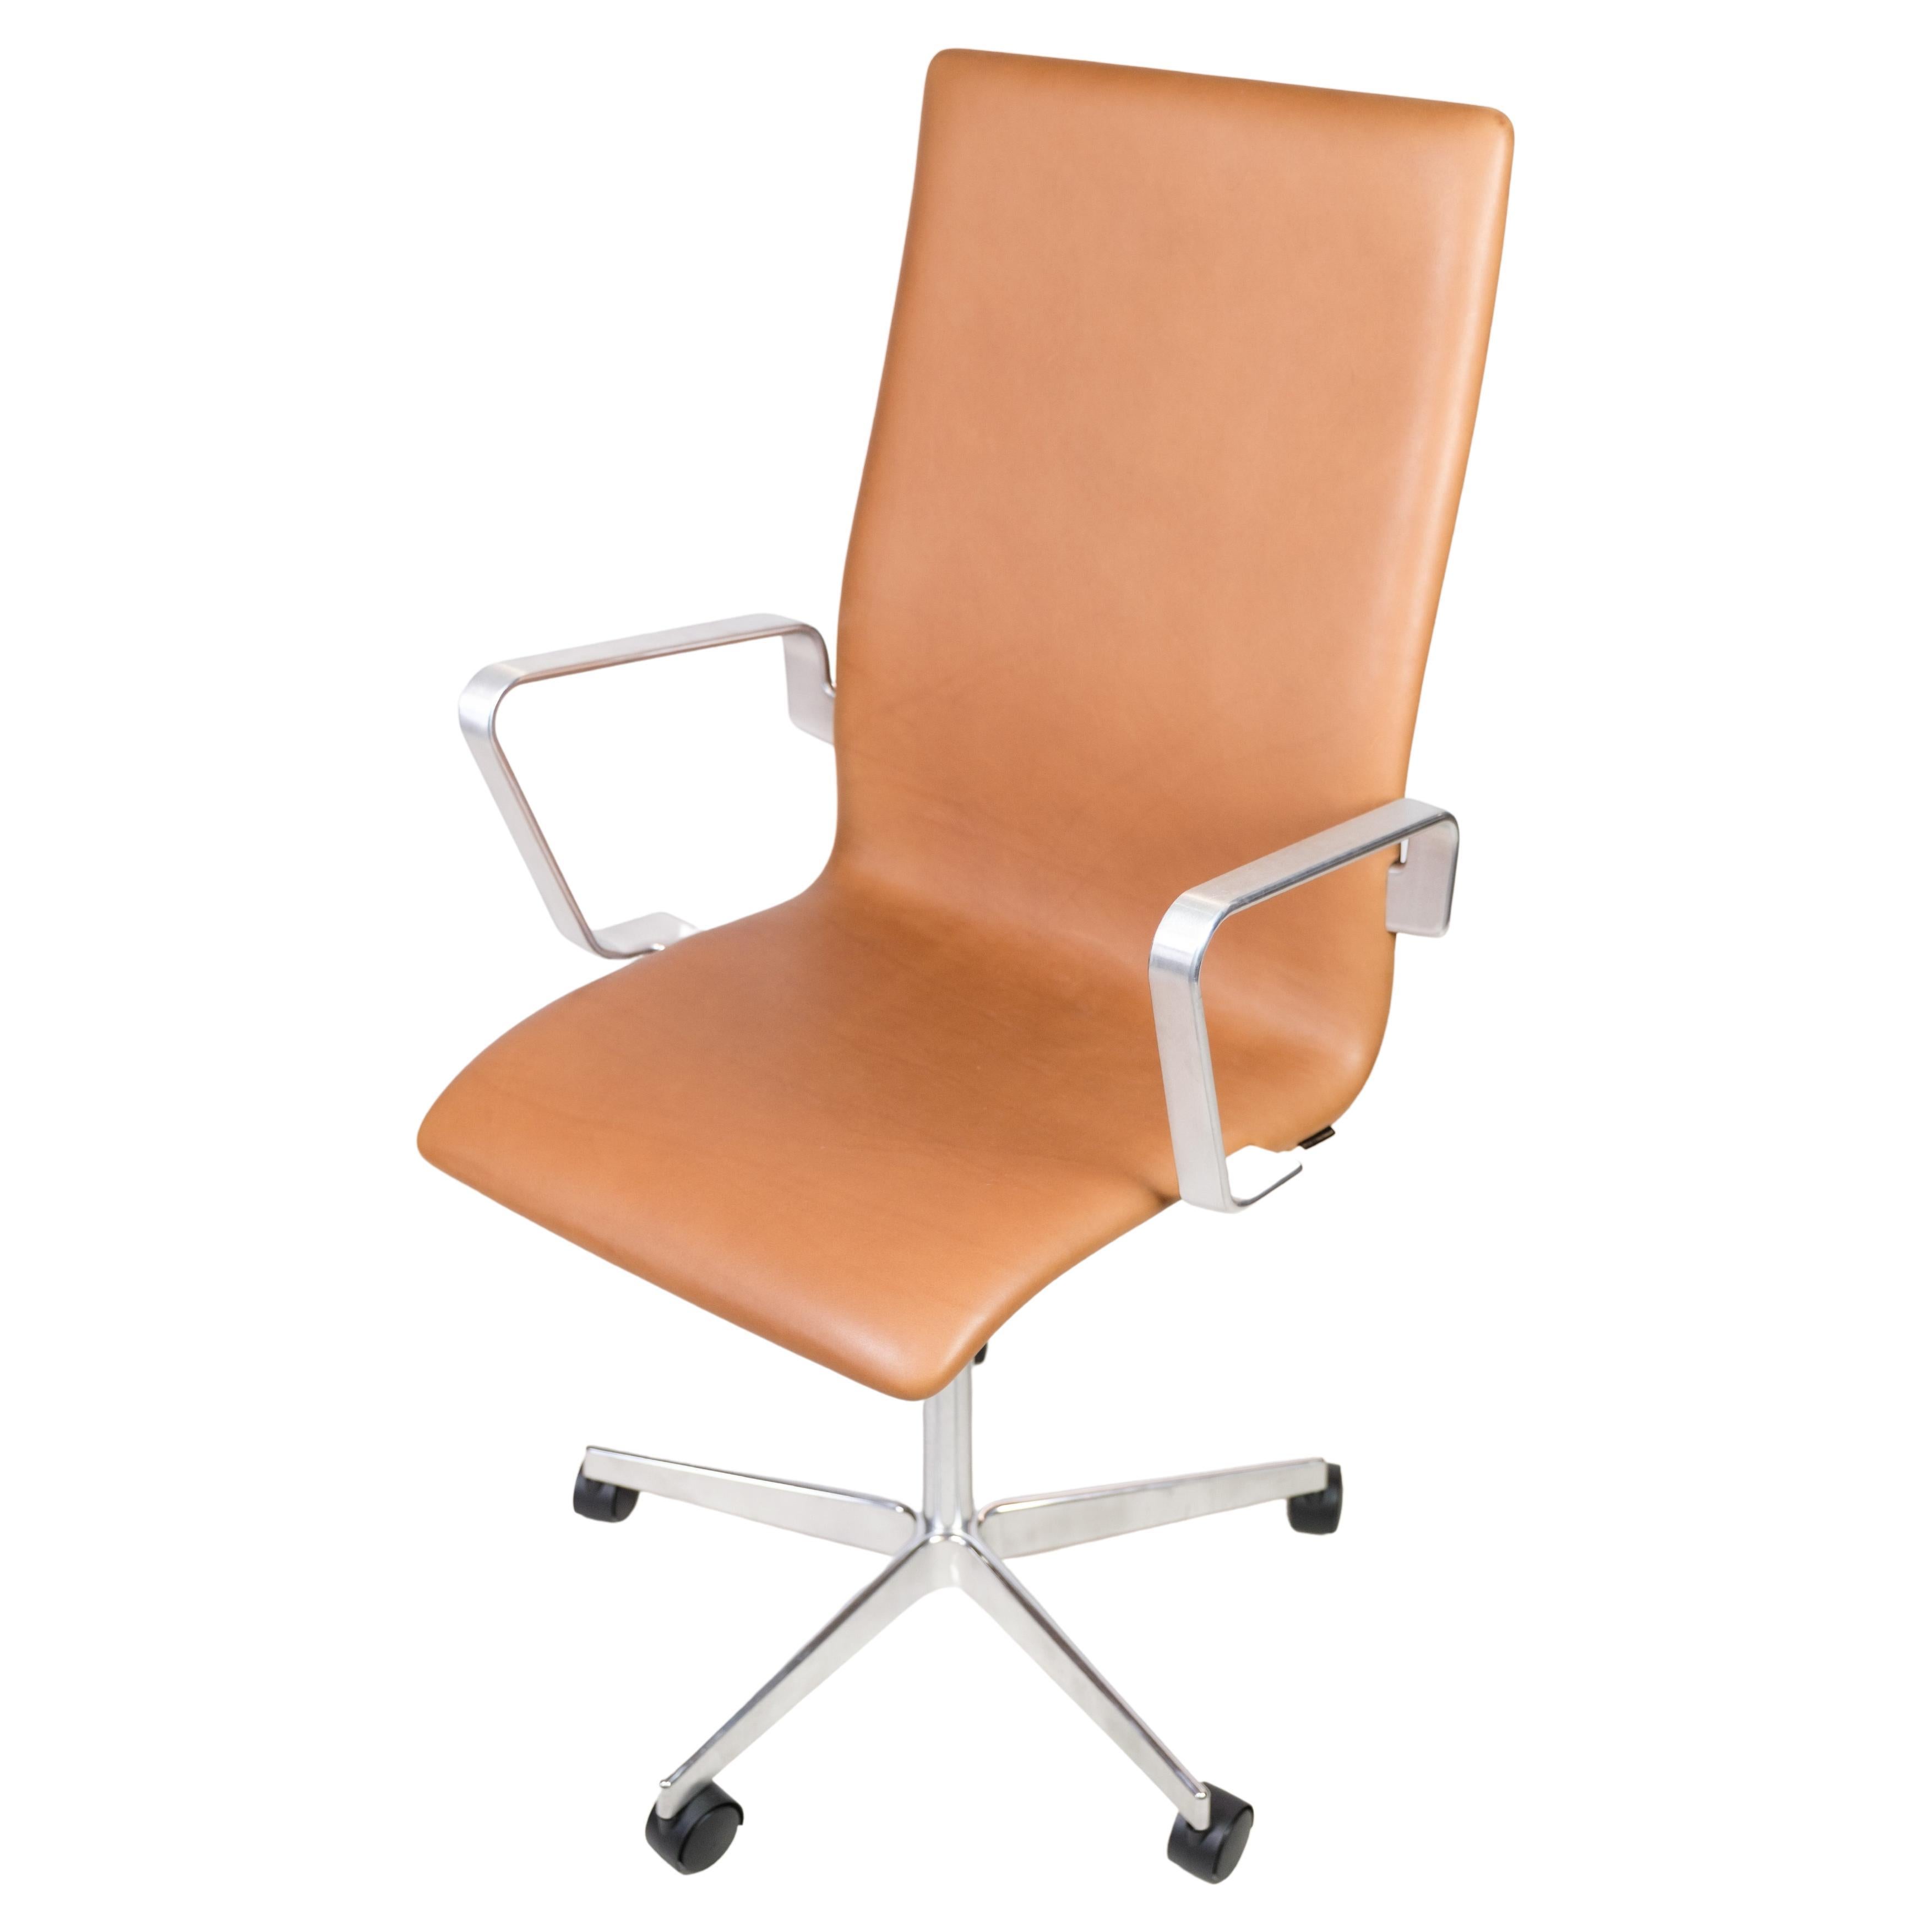 Oxford Classic Office Chair, Model 3293c, Cognac Leather, Arne Jacobsen, 1963